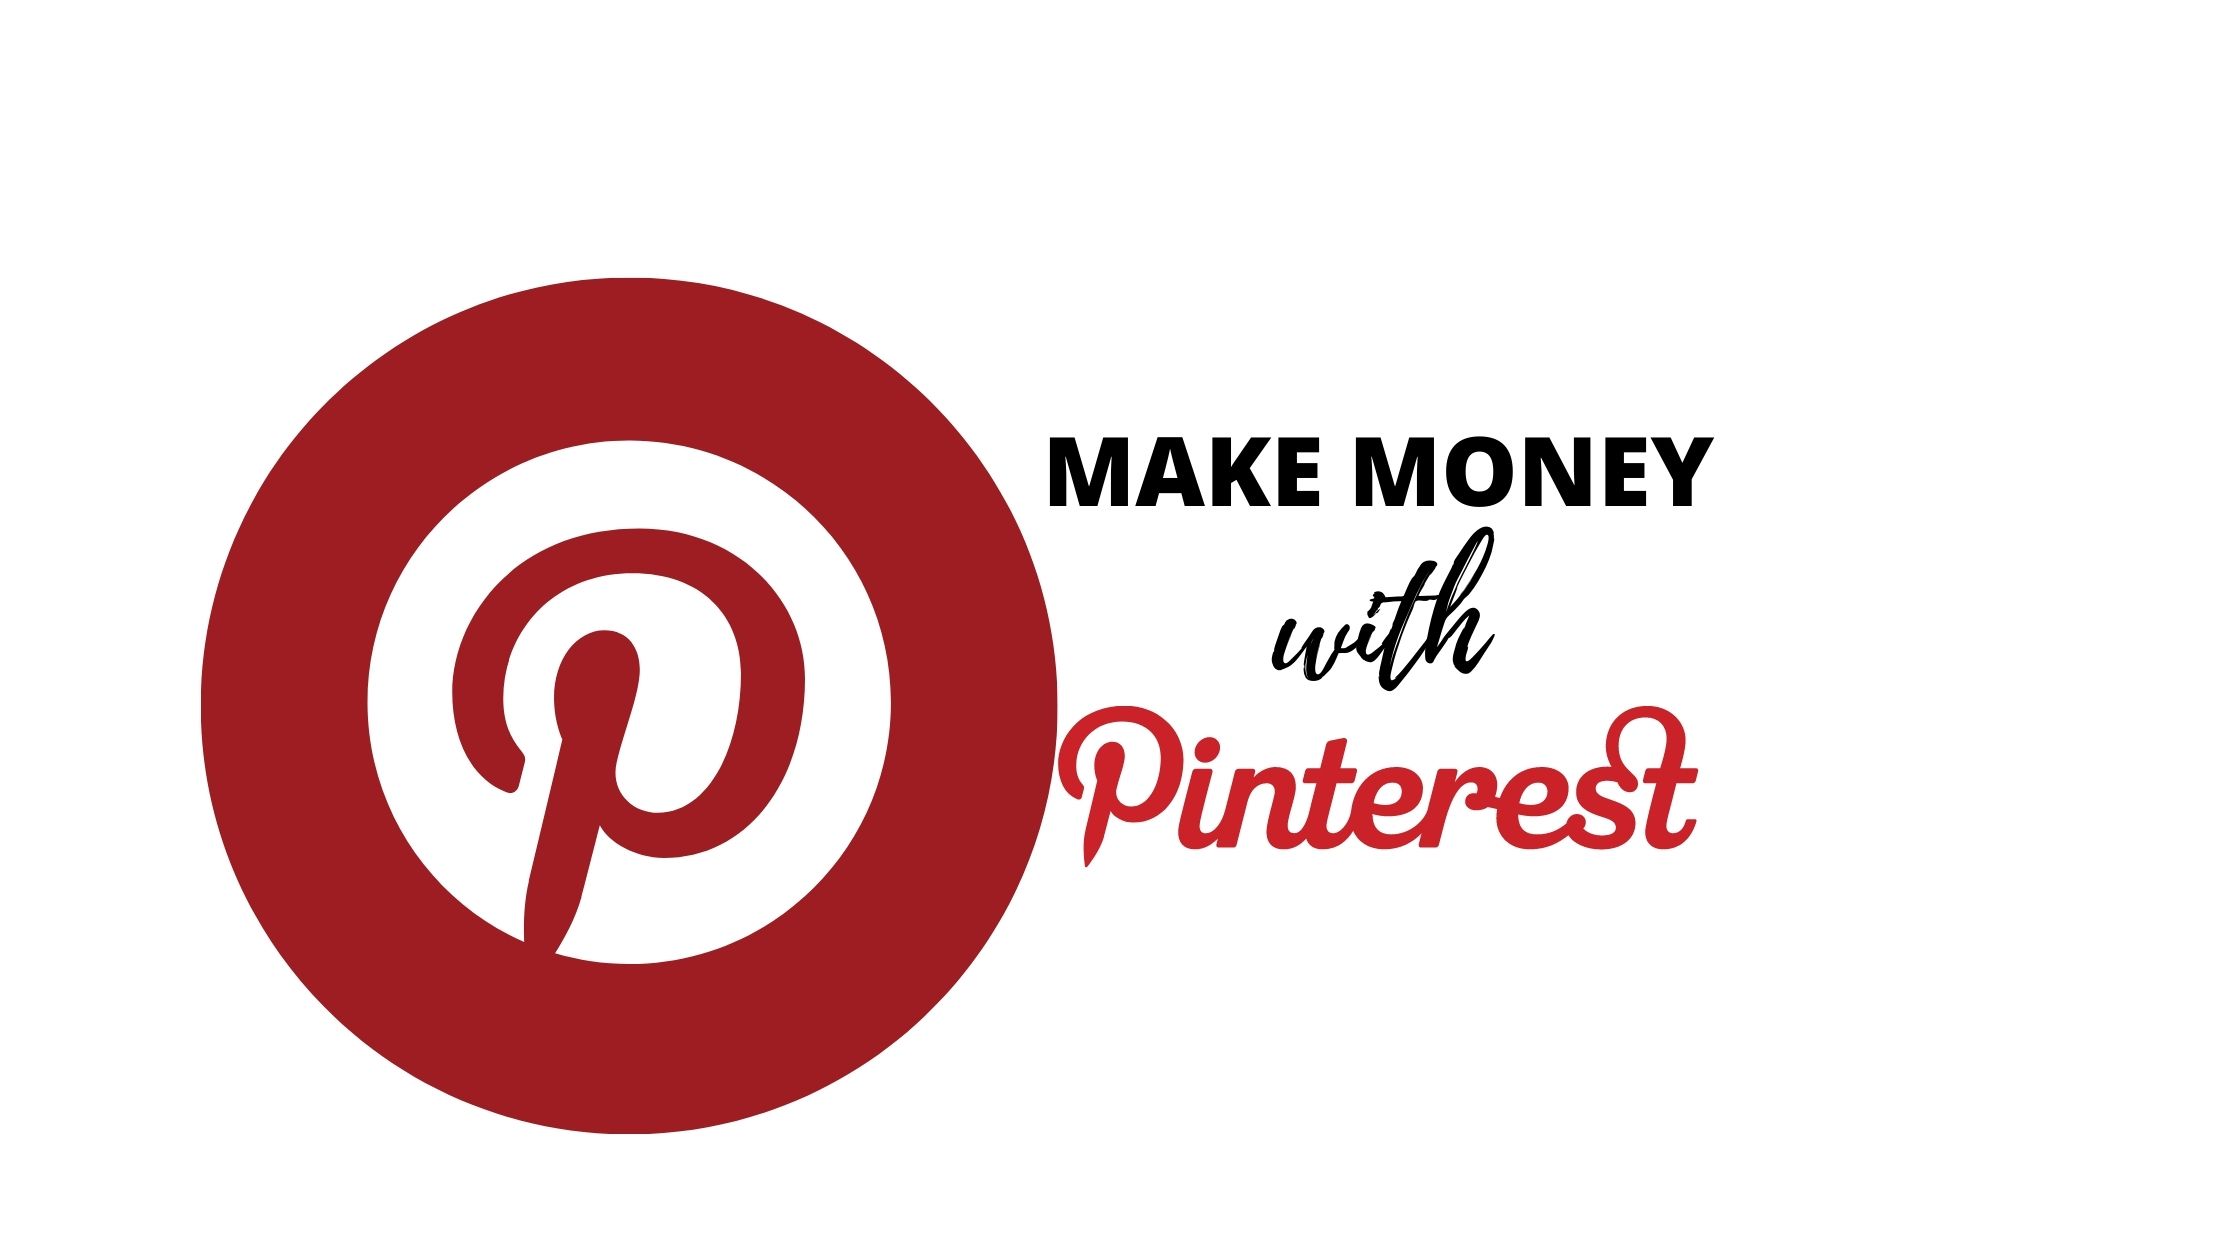 Make money with Pinterest